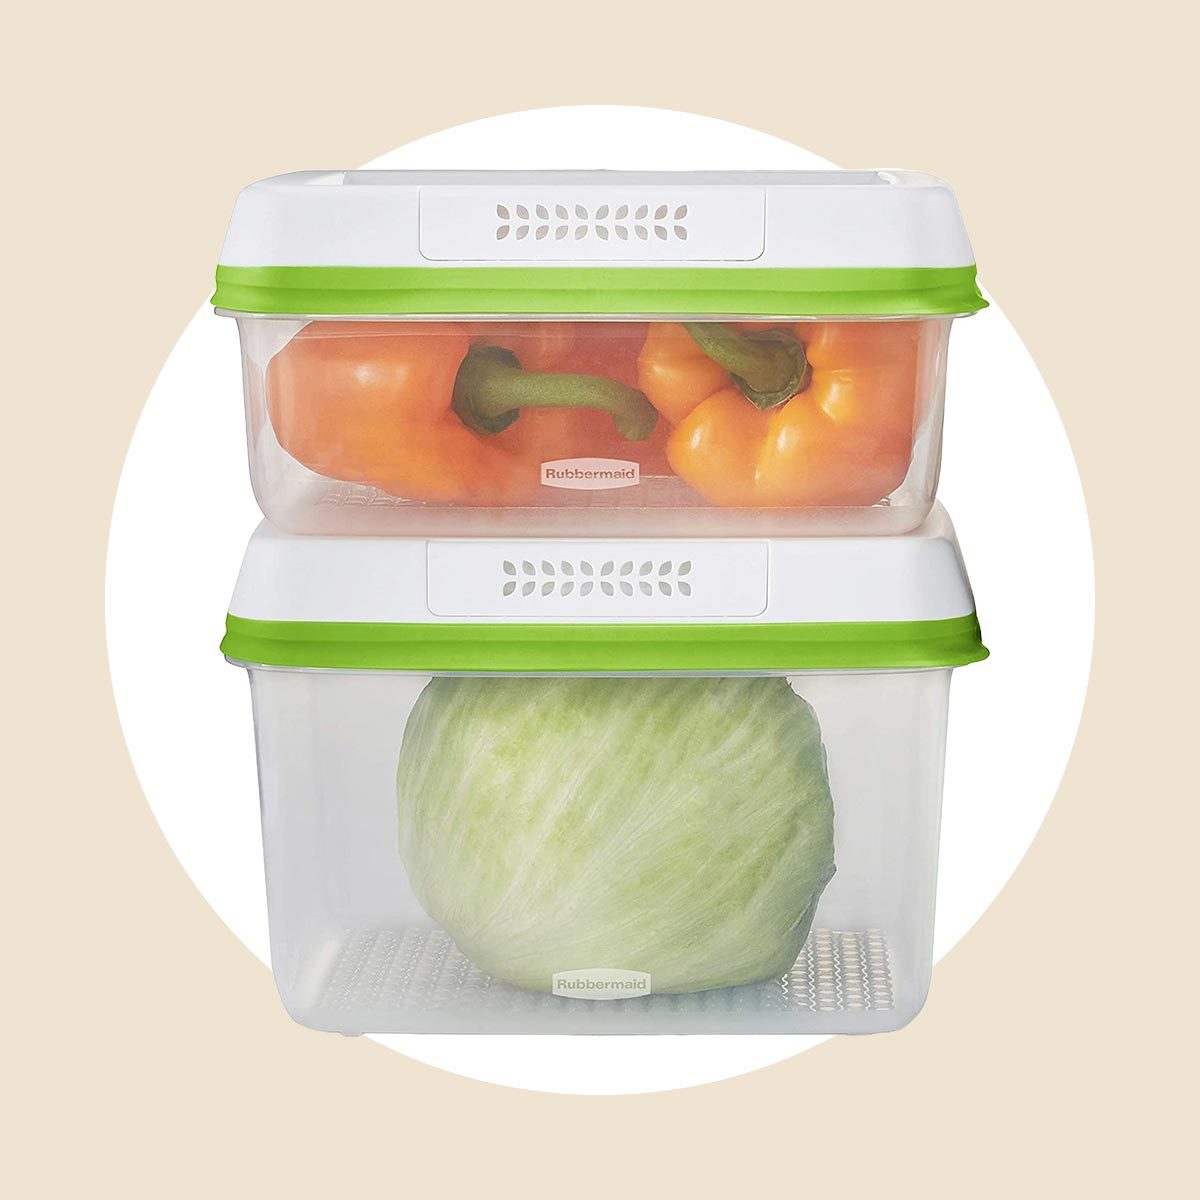 WalterDrake Lettuce KeeperTM - Lettuce Crisper Salad Keeper Container Keeps  your Salads and Vegetables Crisp and Fresh- 7 X 8 (brown) (1) (1)